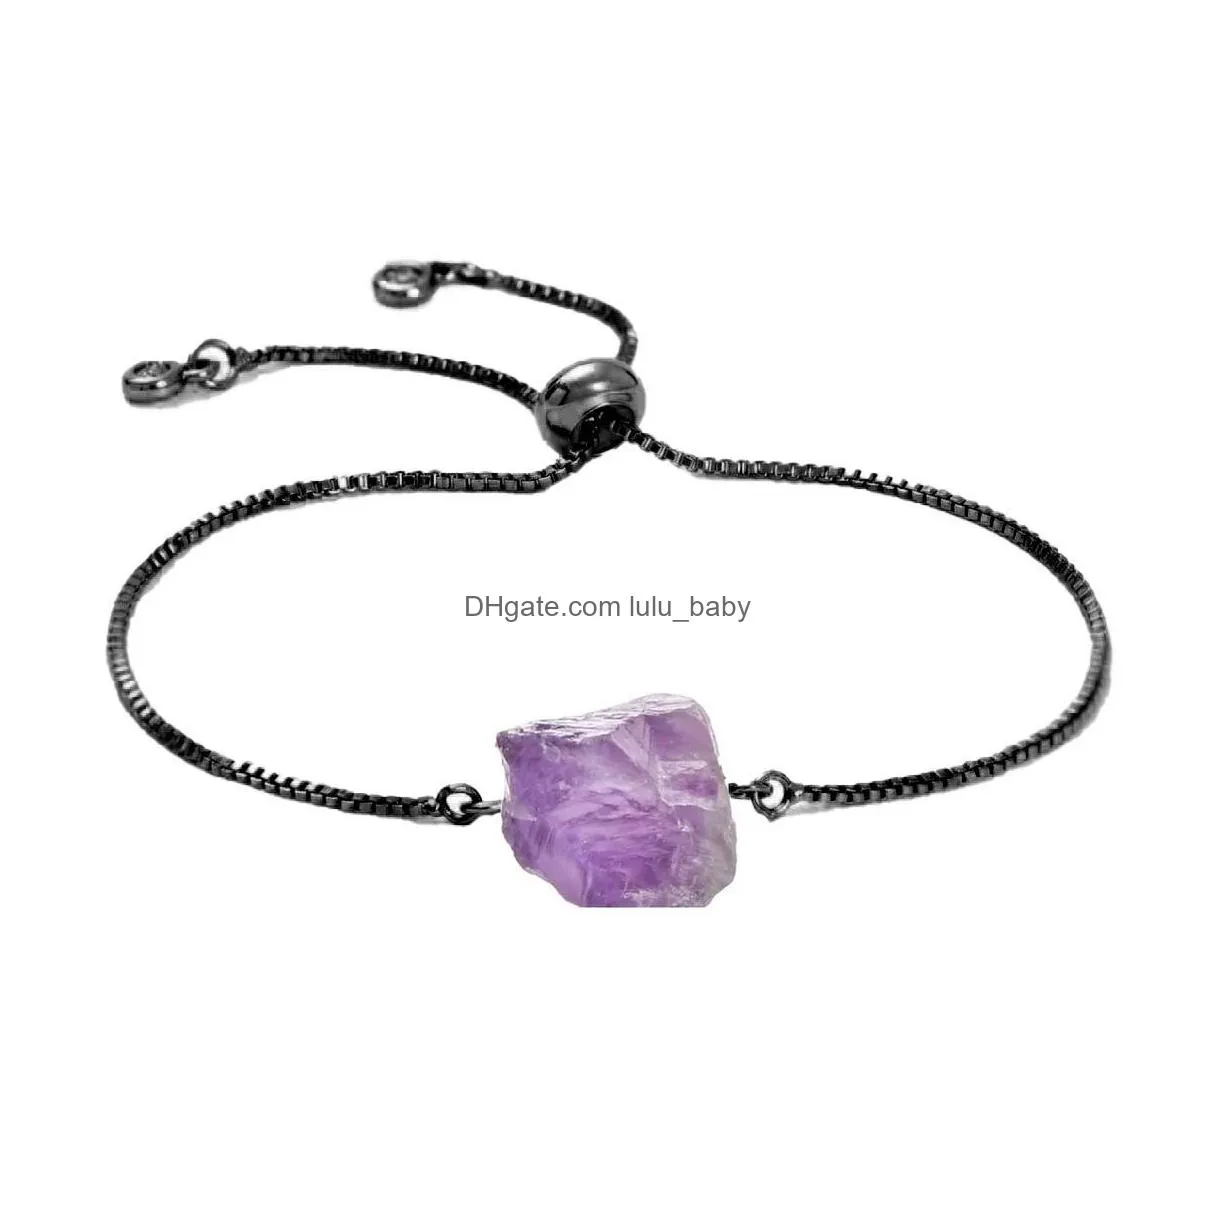 women raw gemstone link chain bracelet black diffuse energy healing chakra crystal yoga cuff bangle rough original stone couple